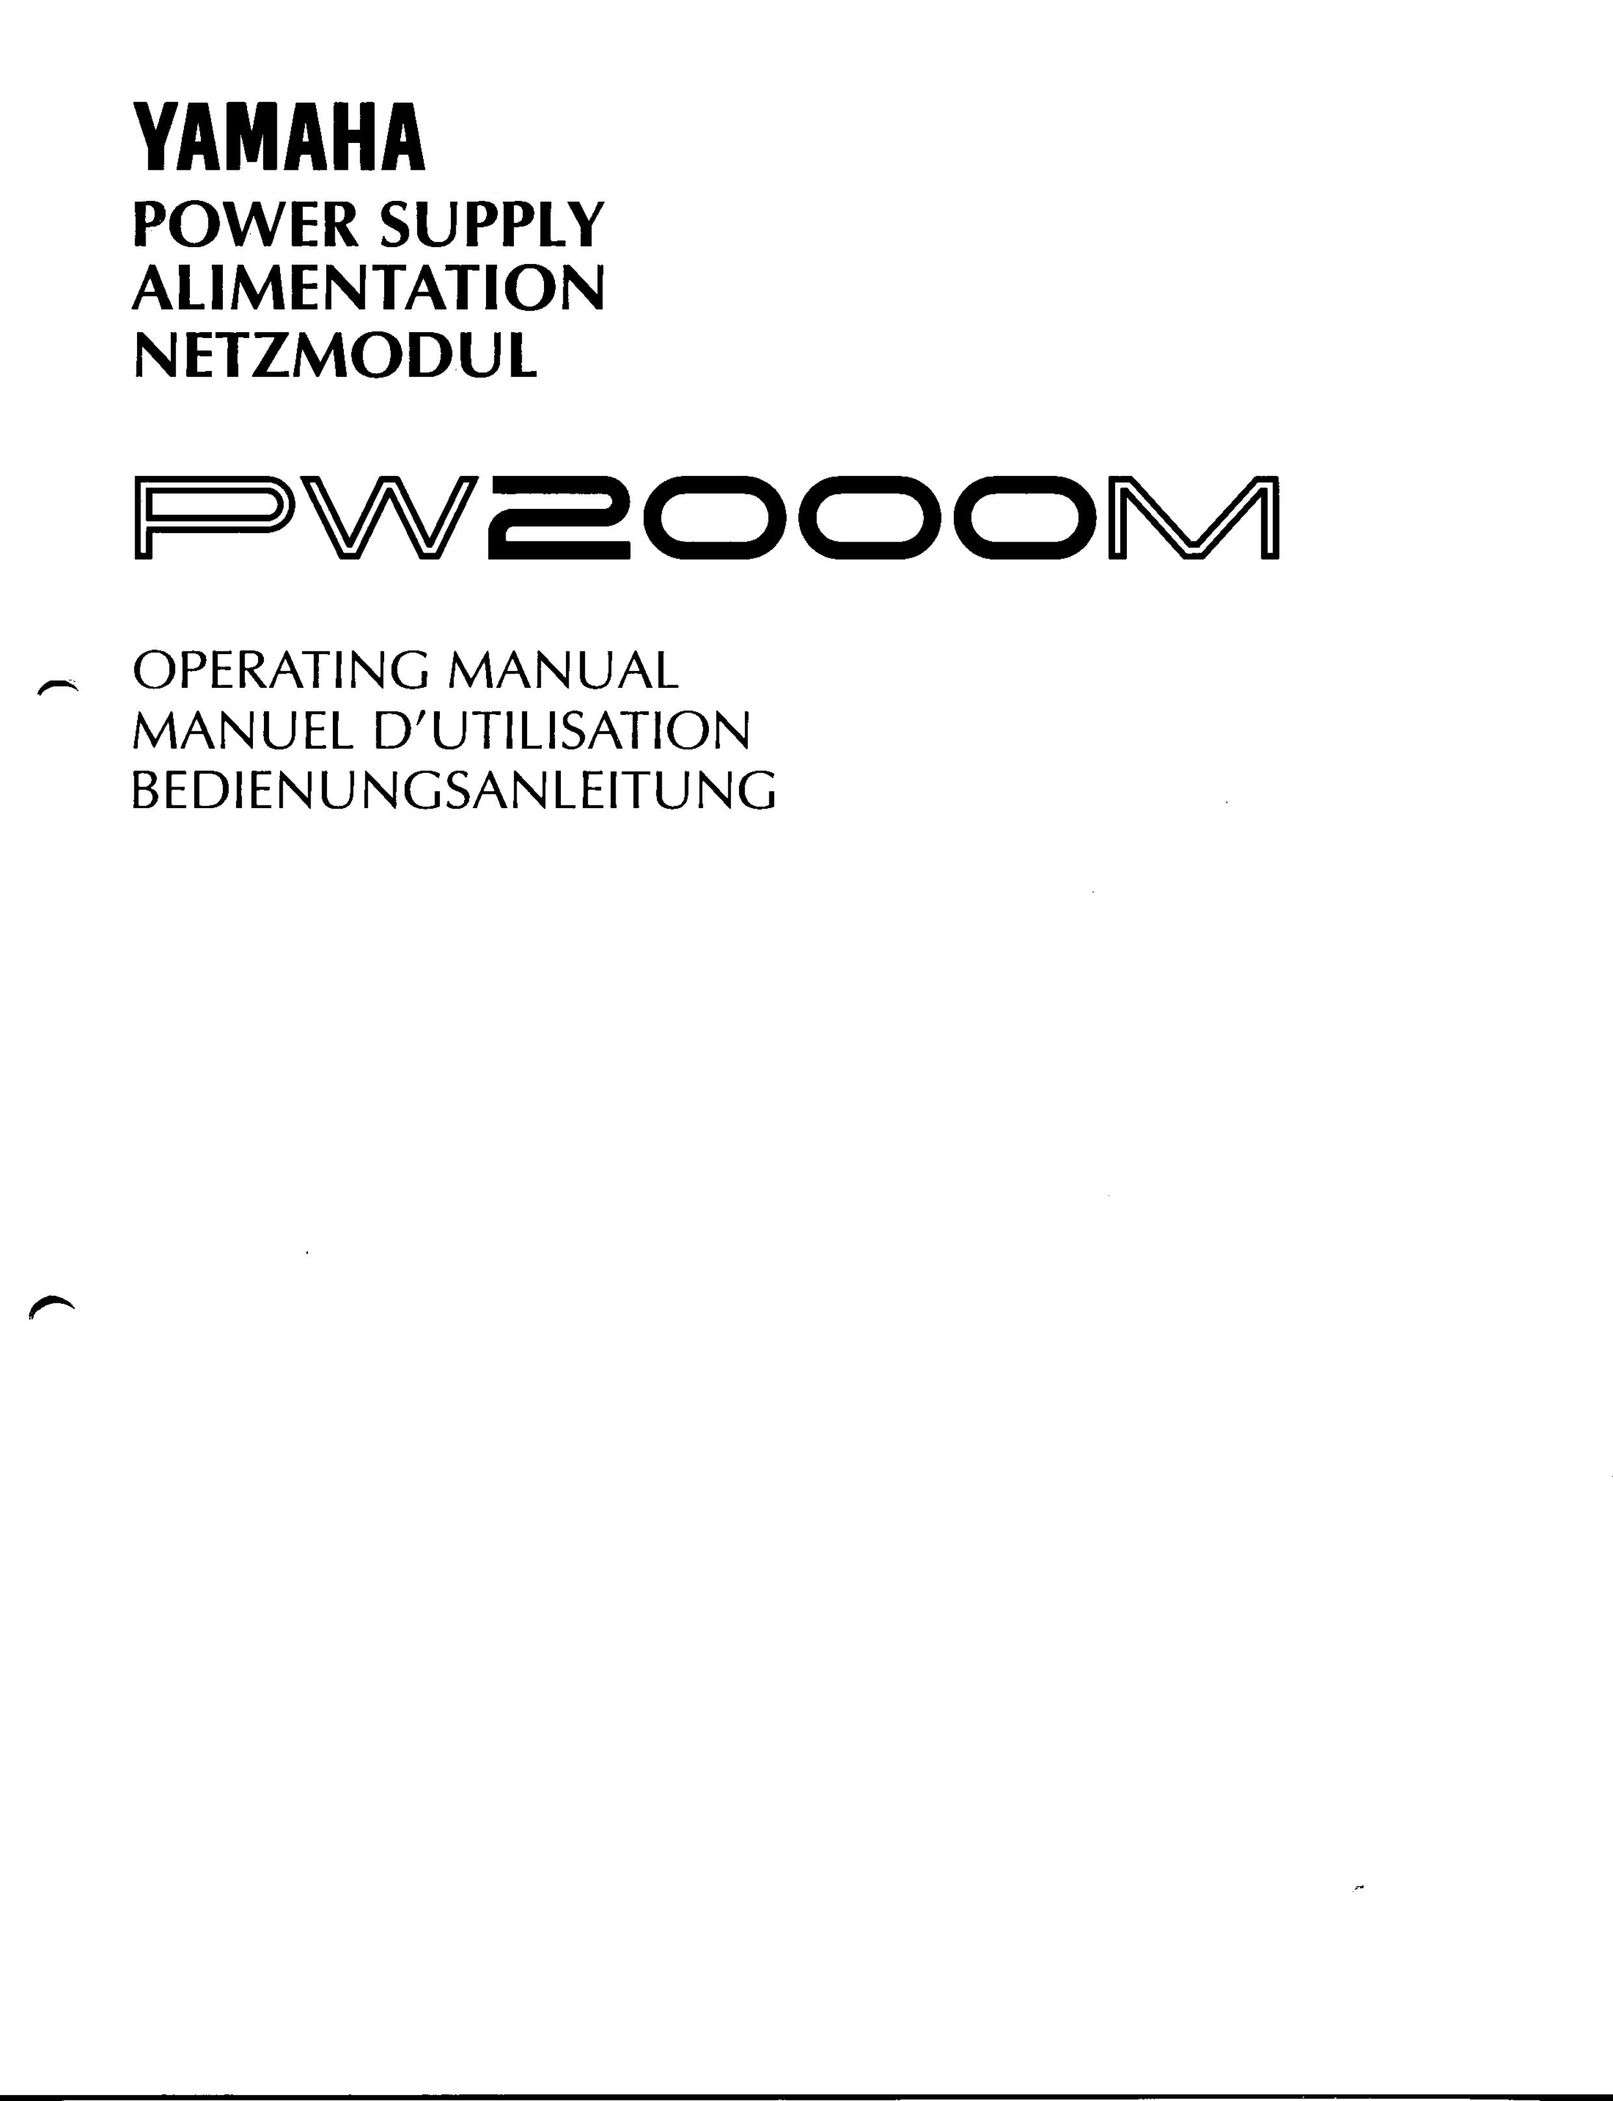 Yamaha PW2000M Power Supply User Manual